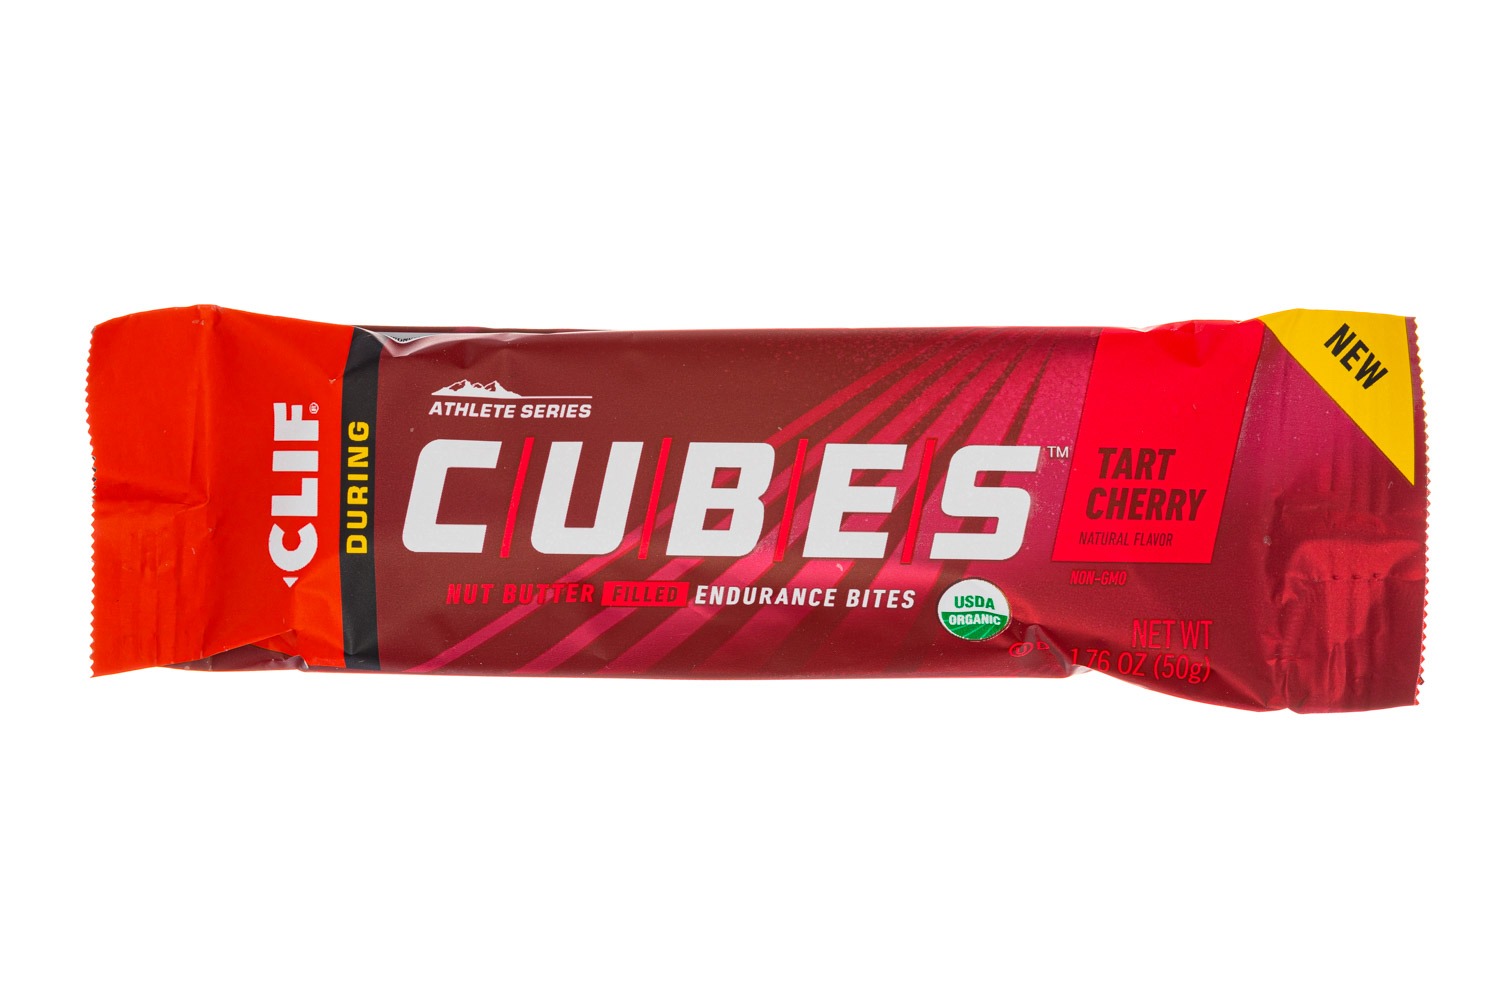 Cubes - Tart Cherry